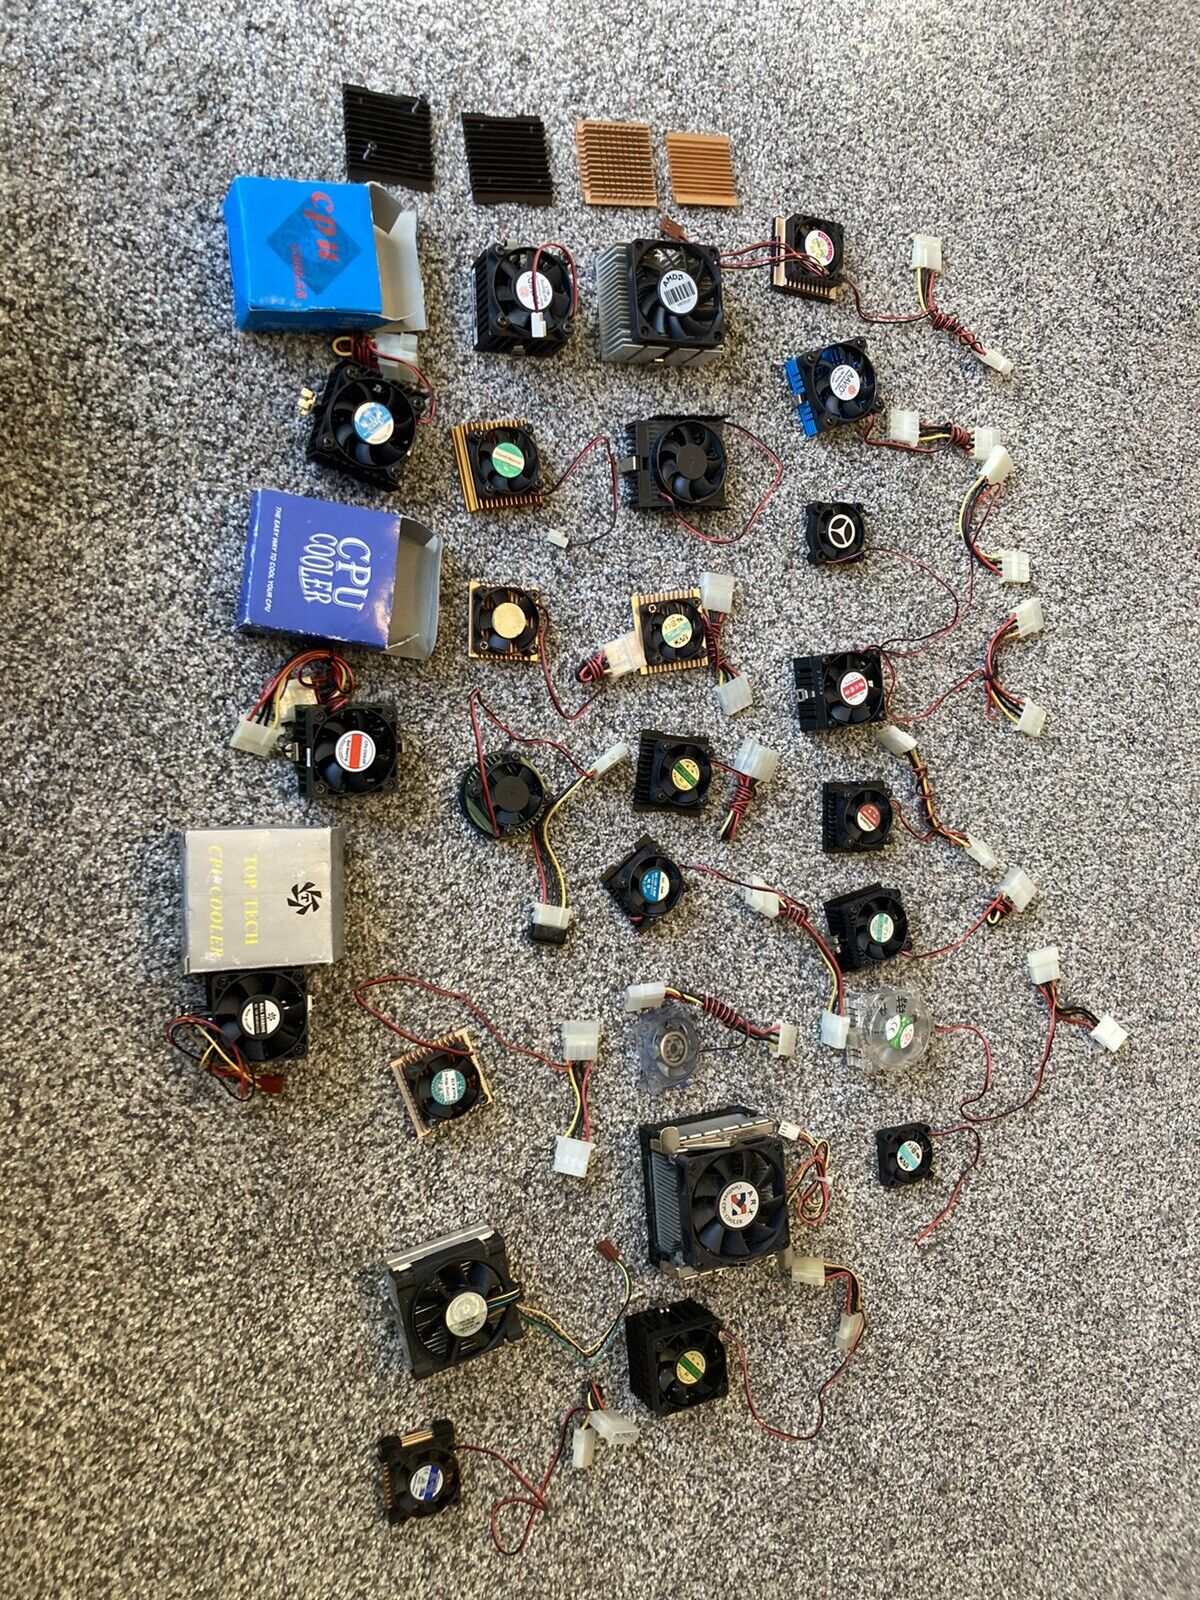 Vintage CPU Cooler lot. Socket 370, A, 7, 486, pentium 3. Lot of 26 Intel AMD